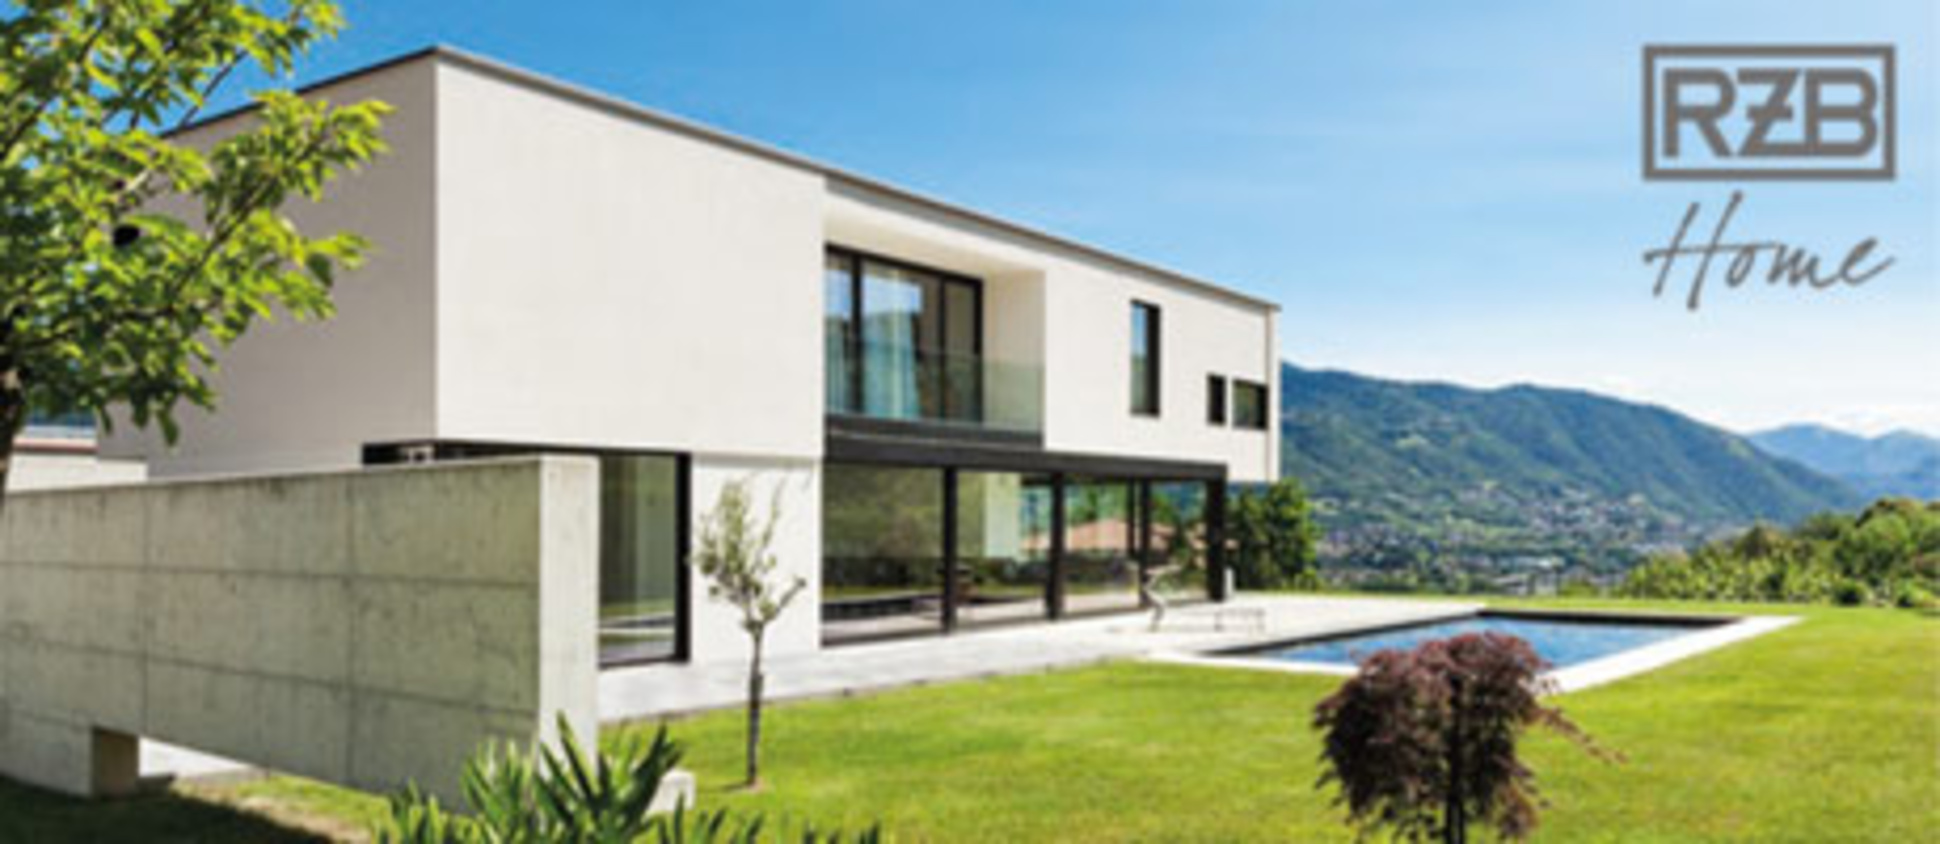 RZB Home + Basic bei Elektro Dietz GmbH in Weilerbach